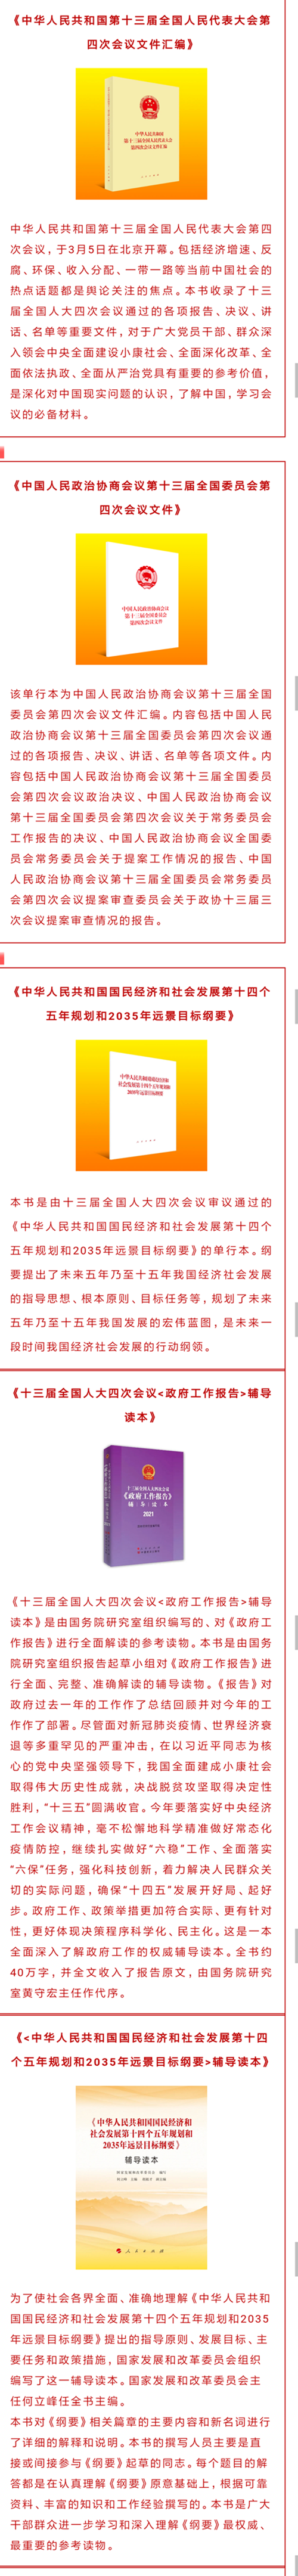 Screenshot_2021-04-01-14-22-24-205_com.tencent.mm_副本_副本.png